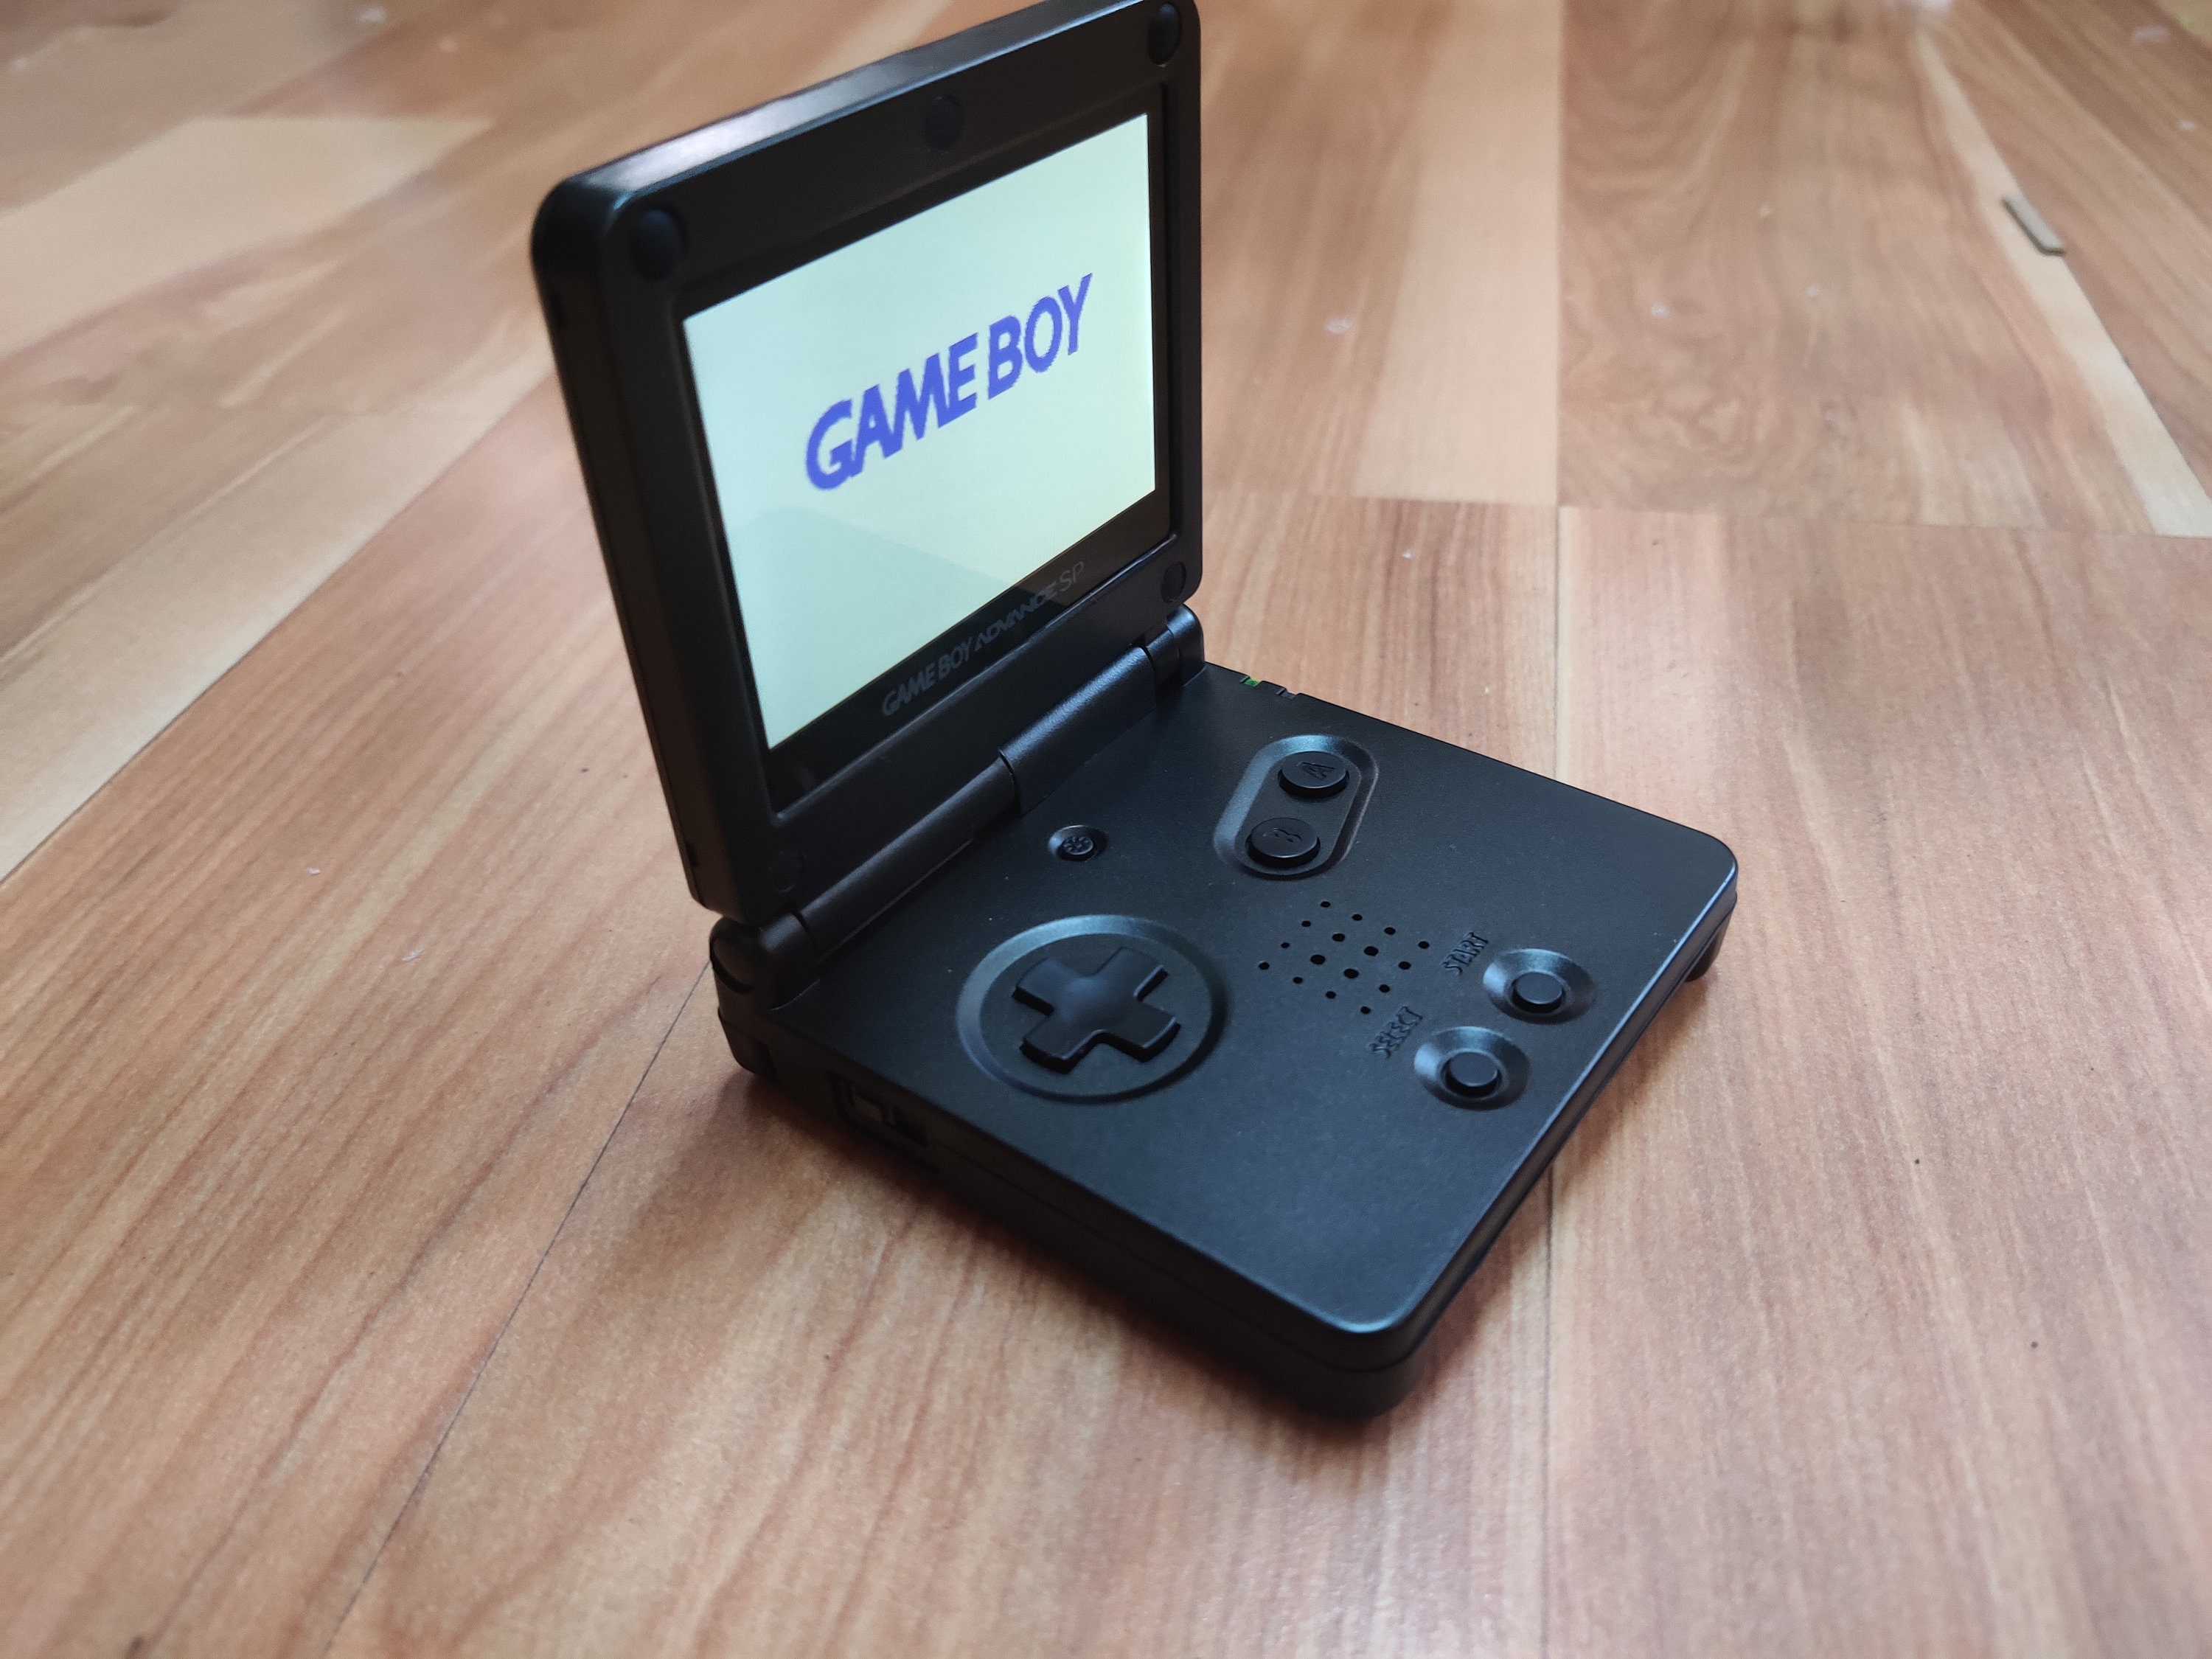 Onyx Black Gameboy Advance SP System Used